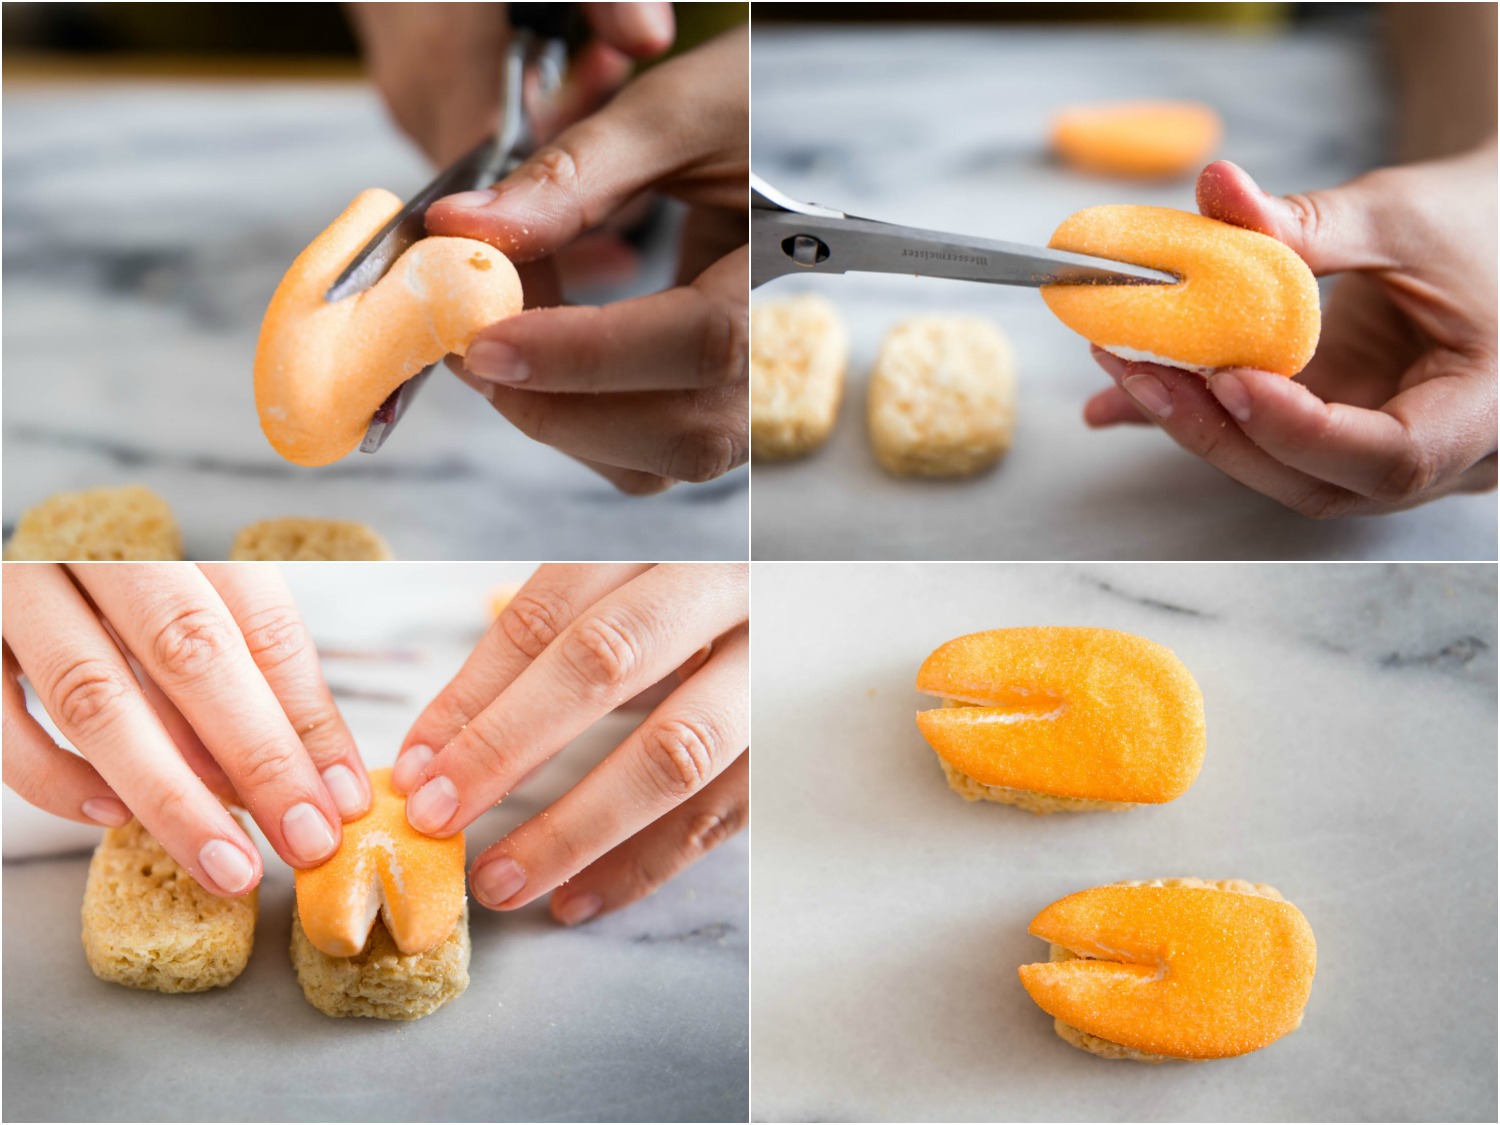 how to make peep sushi or peepshi with Rice Krispies treats